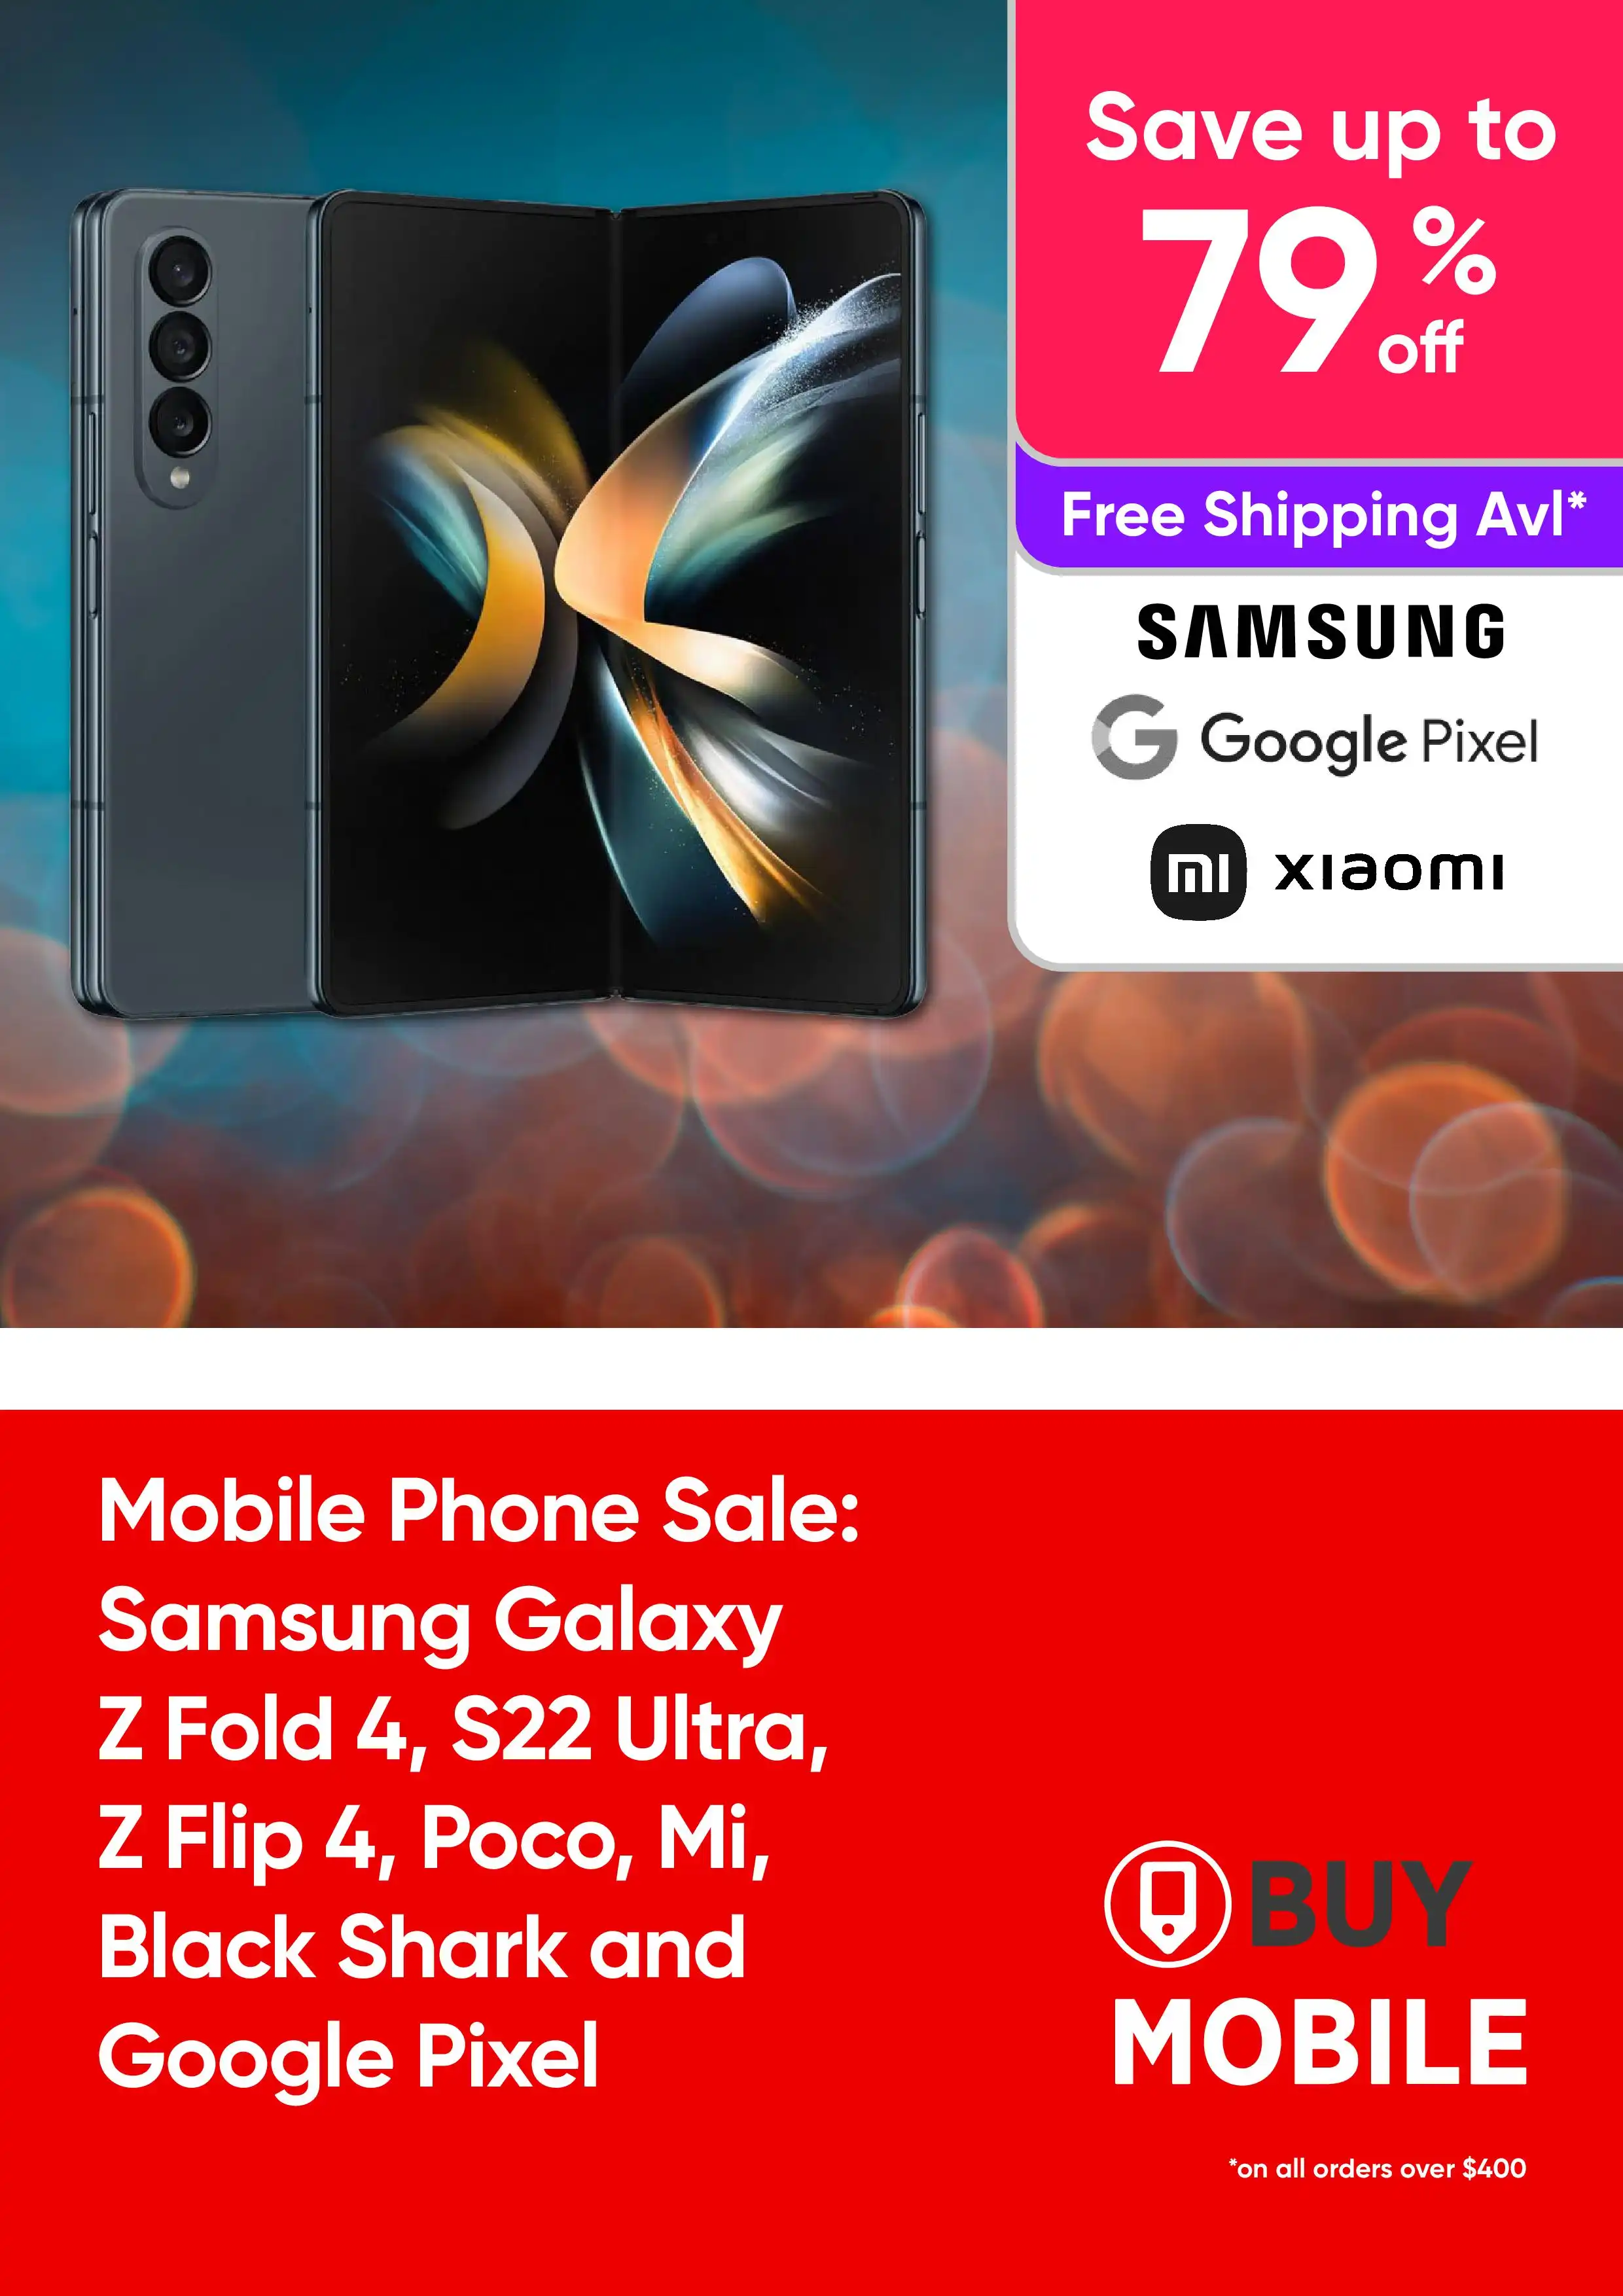 Mobile Phone Sale: Samsung Galaxy Z Fold 4, S22 Ultra, Z Flip 4, Poco, Mi, Black Shark and Google Pixel – up to 79% off